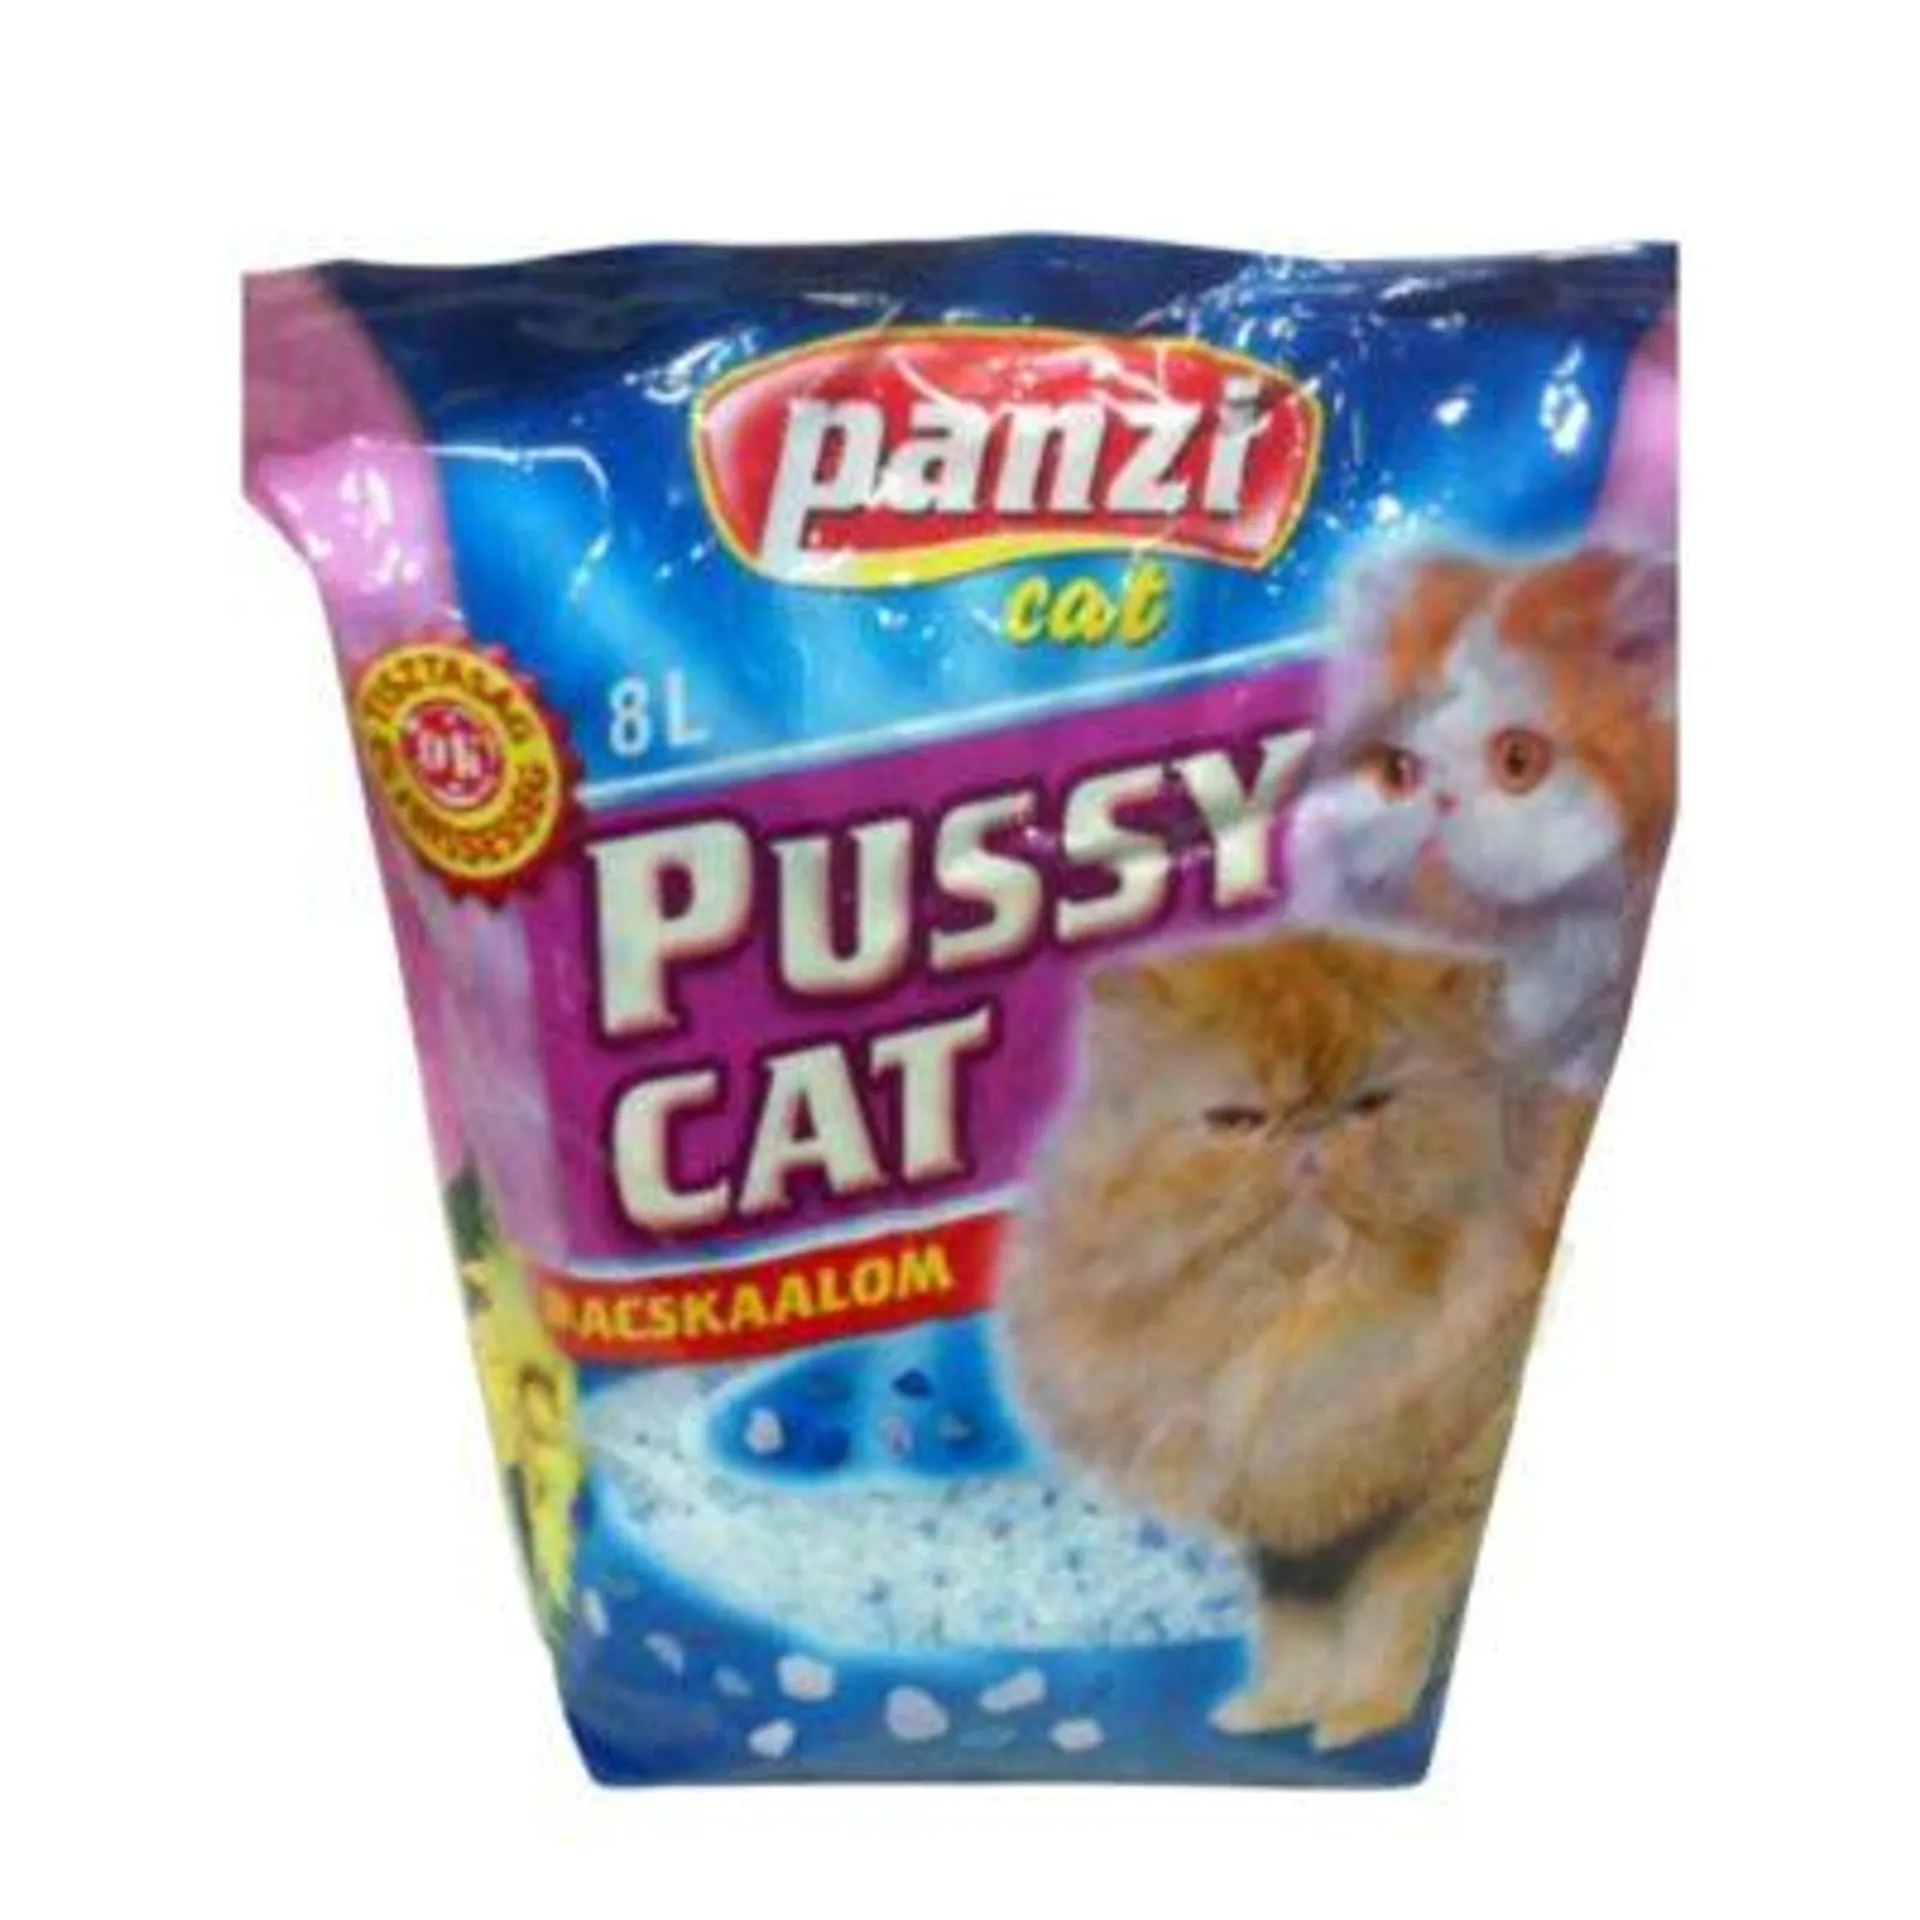 Panzi Pussycat macskaalom (8 literes)